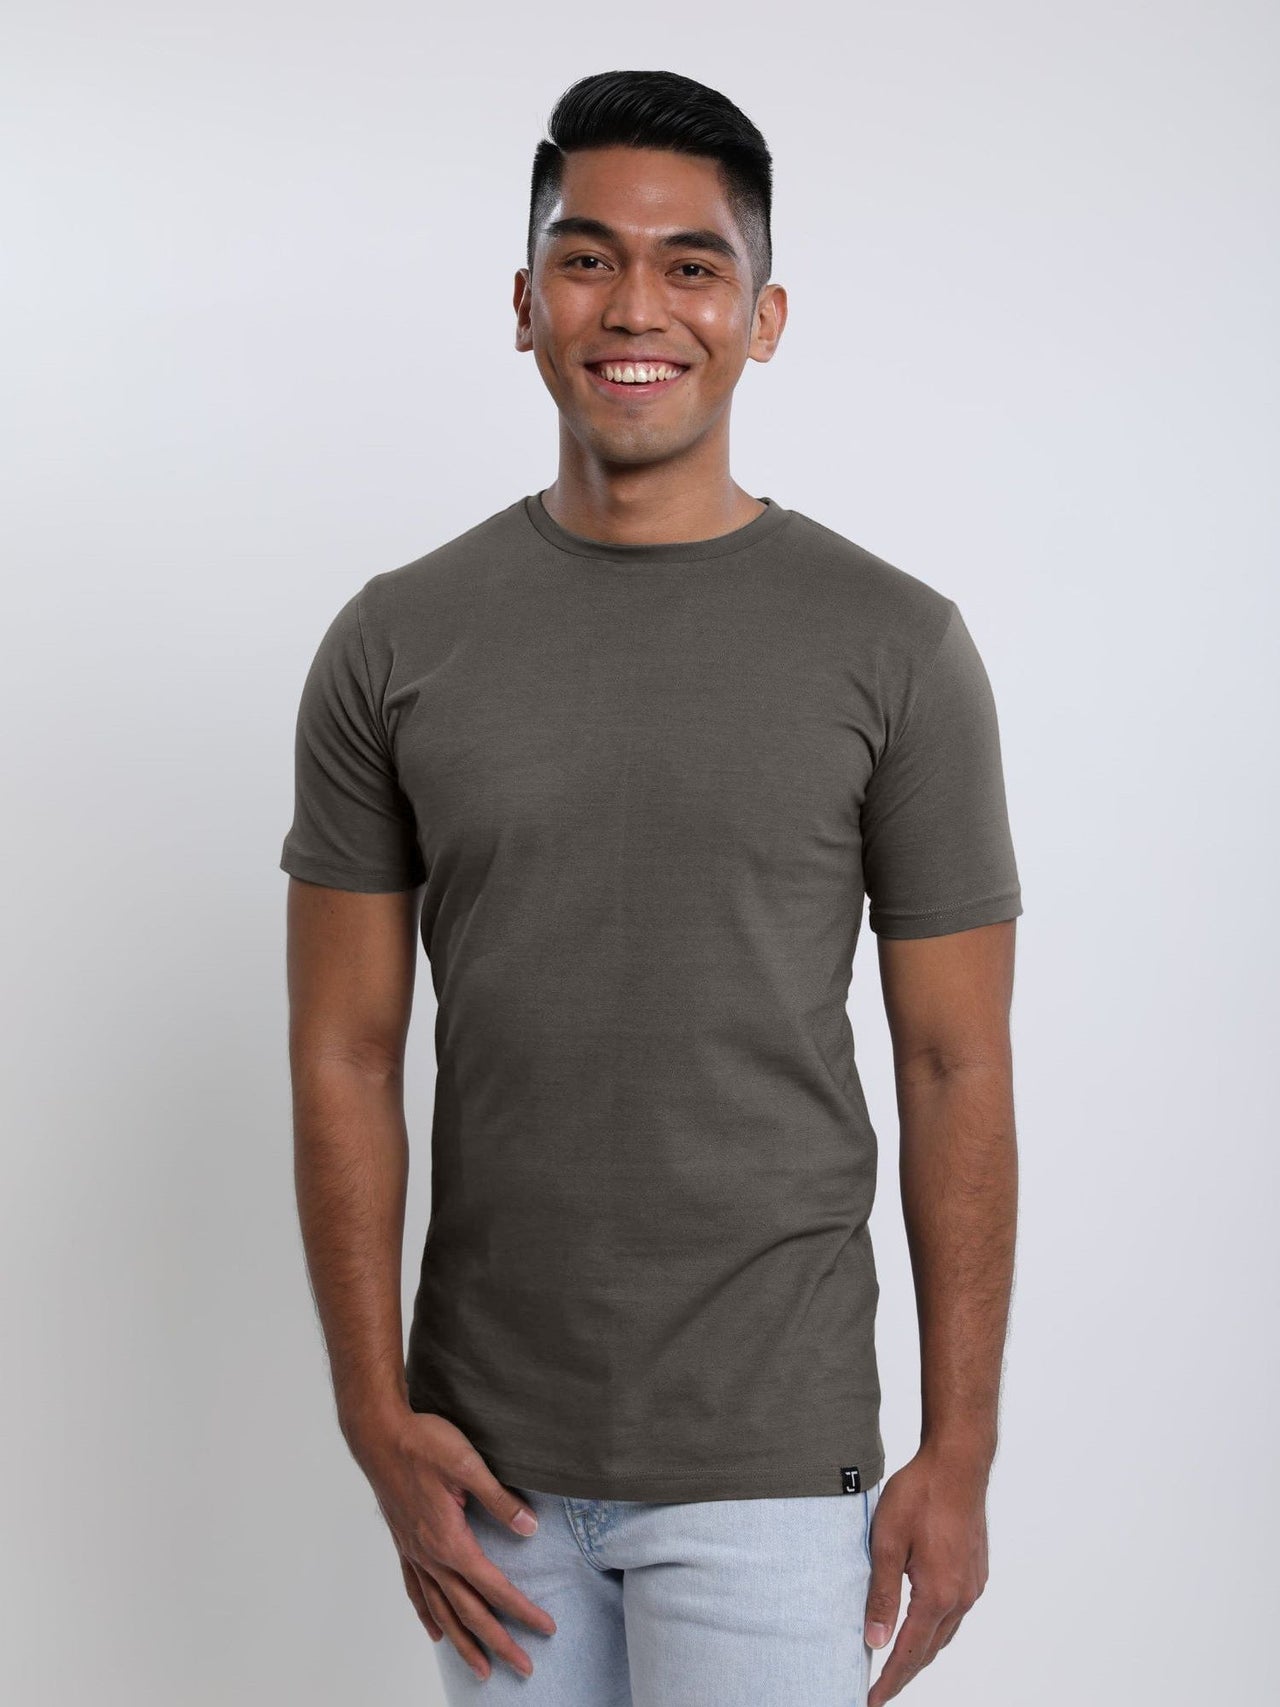 A tall slim guy wearing a dark grey medium tall t-shirt.